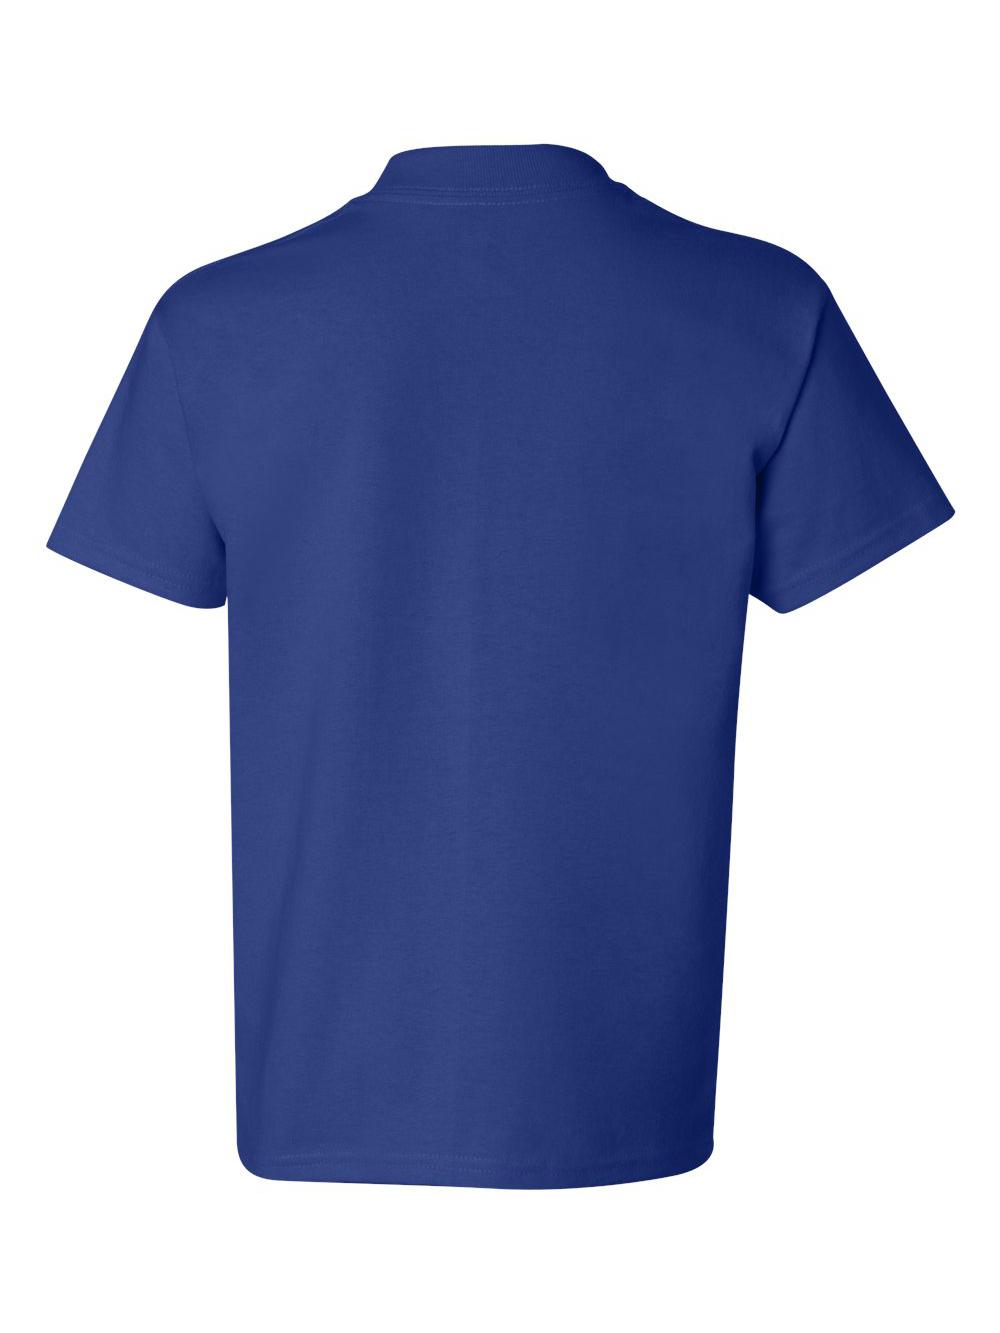 Boys' Tagless Short Sleeve T-Shirt - image 3 of 3